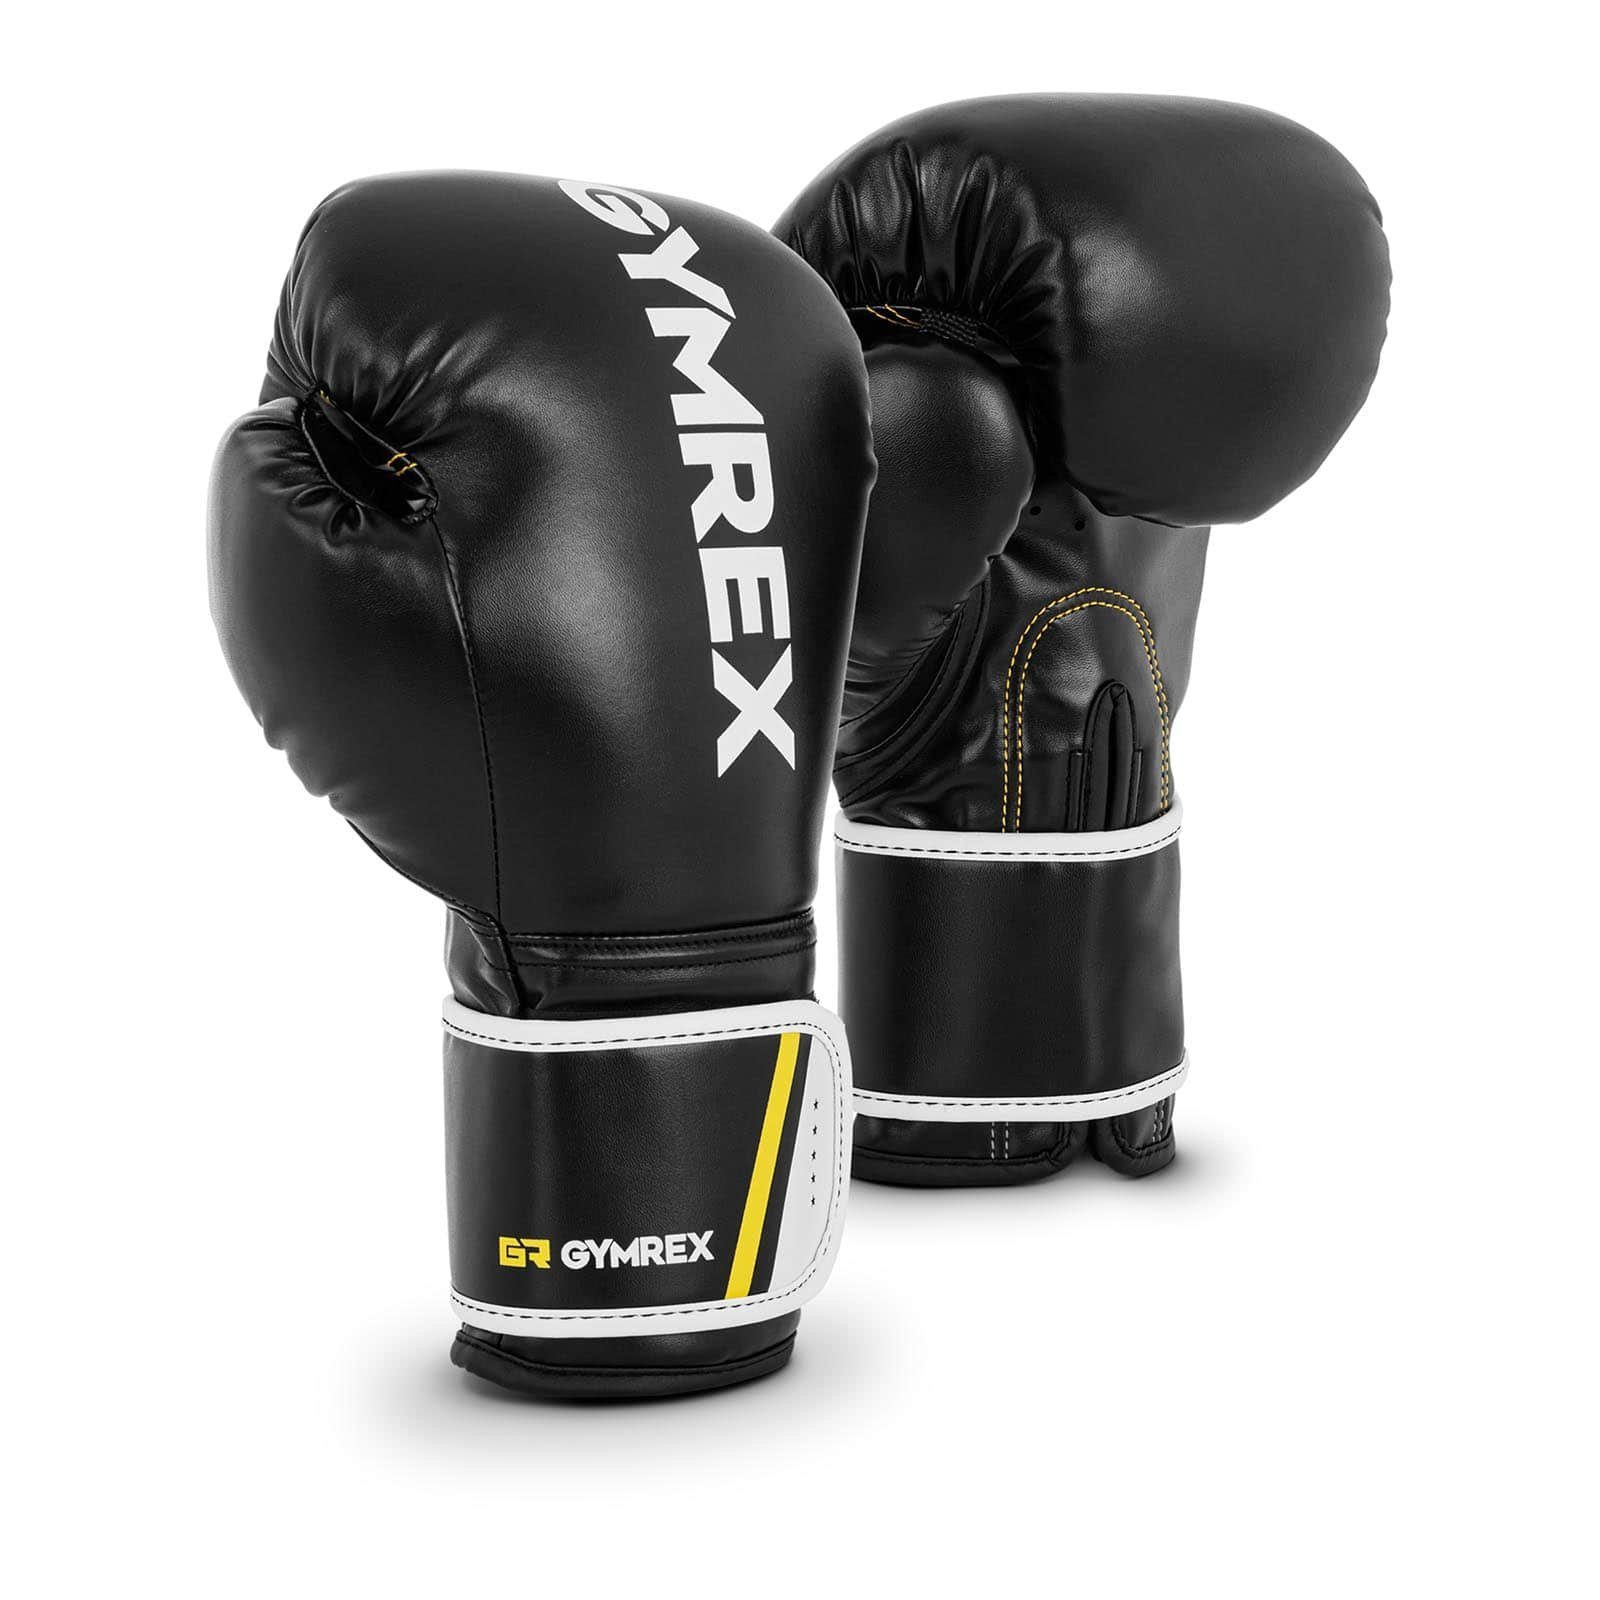 Gymrex Boxhandschuhe Boxhandschuhe - 10 oz - schwarz